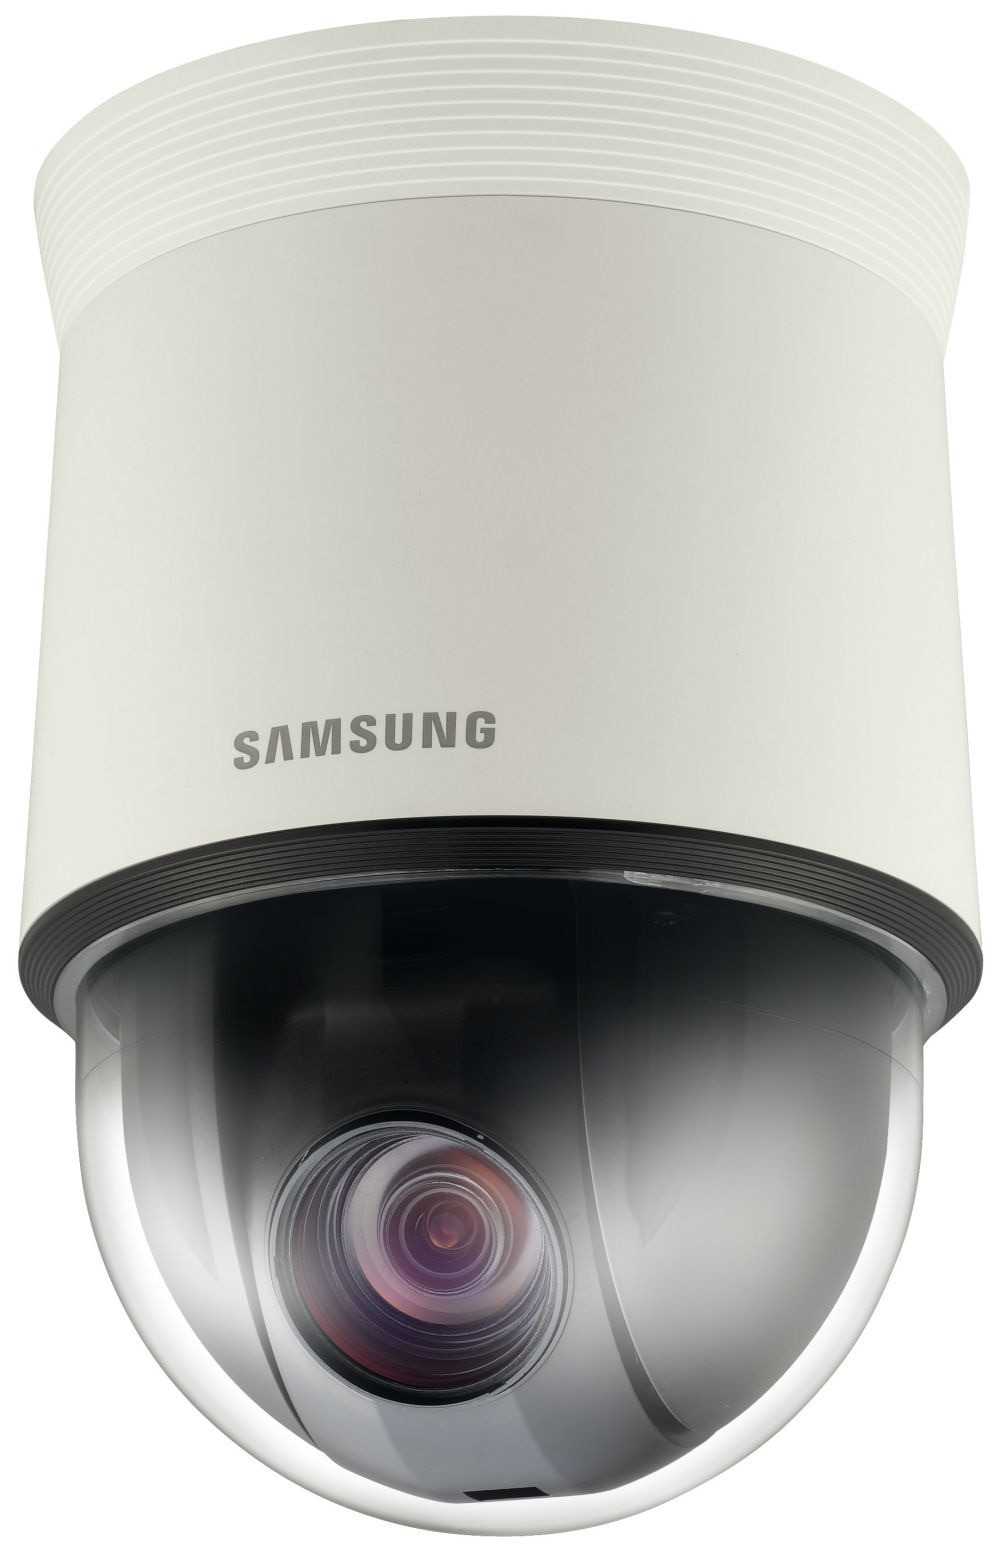 Samsung SCP2373 37x High Resolution WDR PTZ Dome Camera